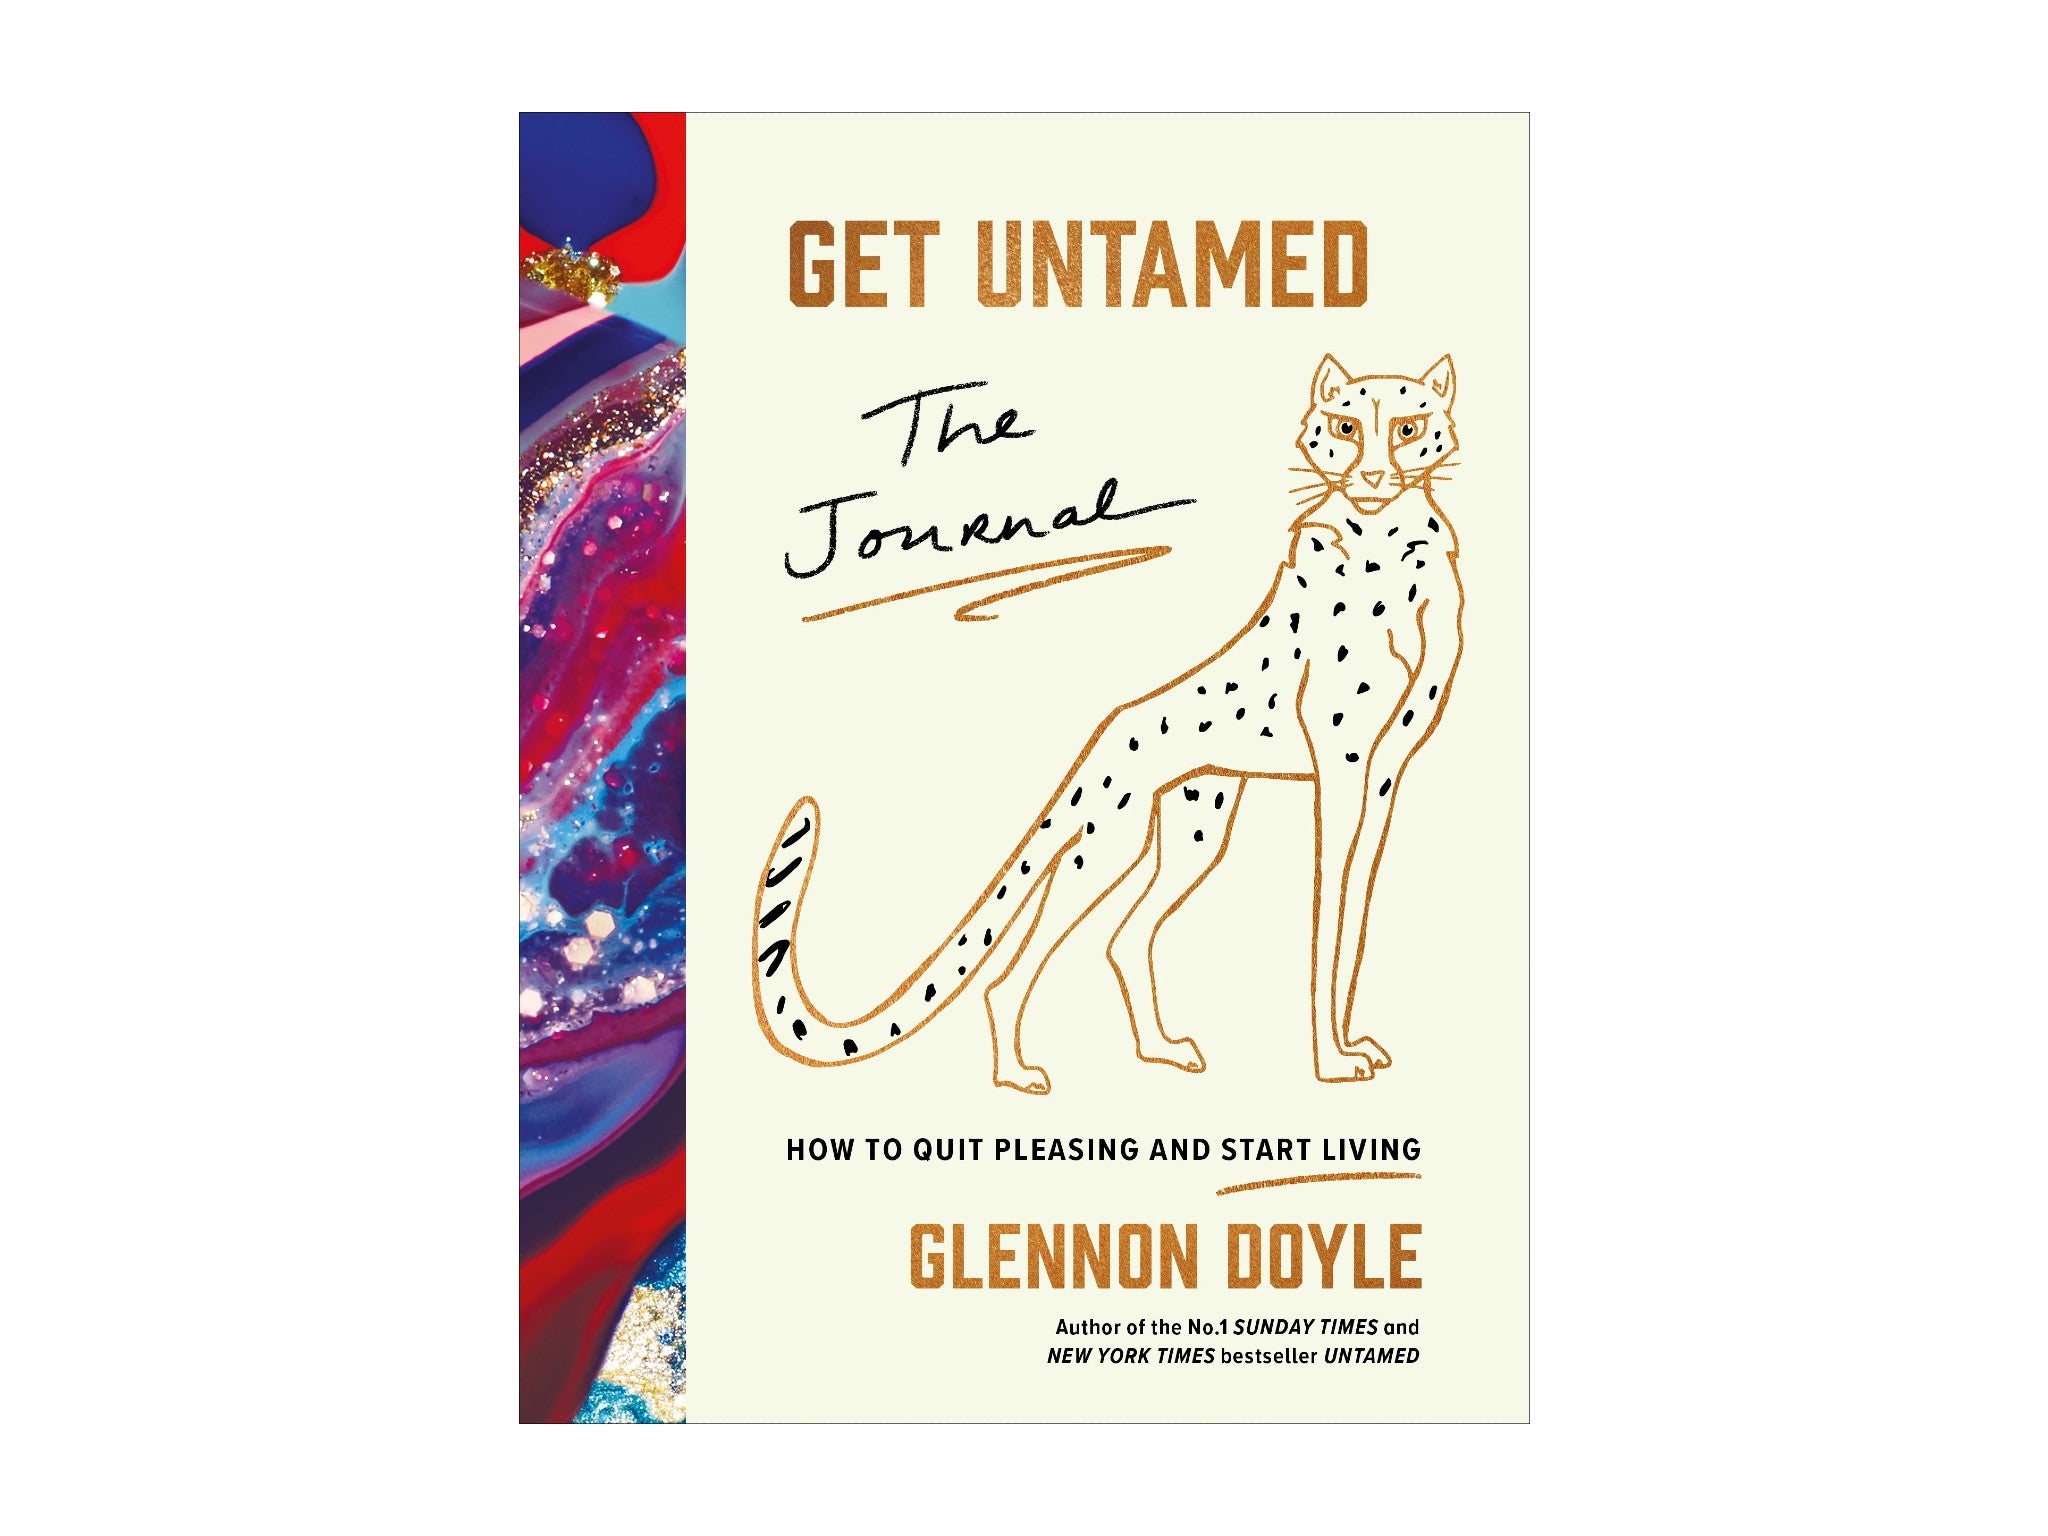 ‘Get Untamed- The Journal’ by Glennon Doyle indybest.jpg